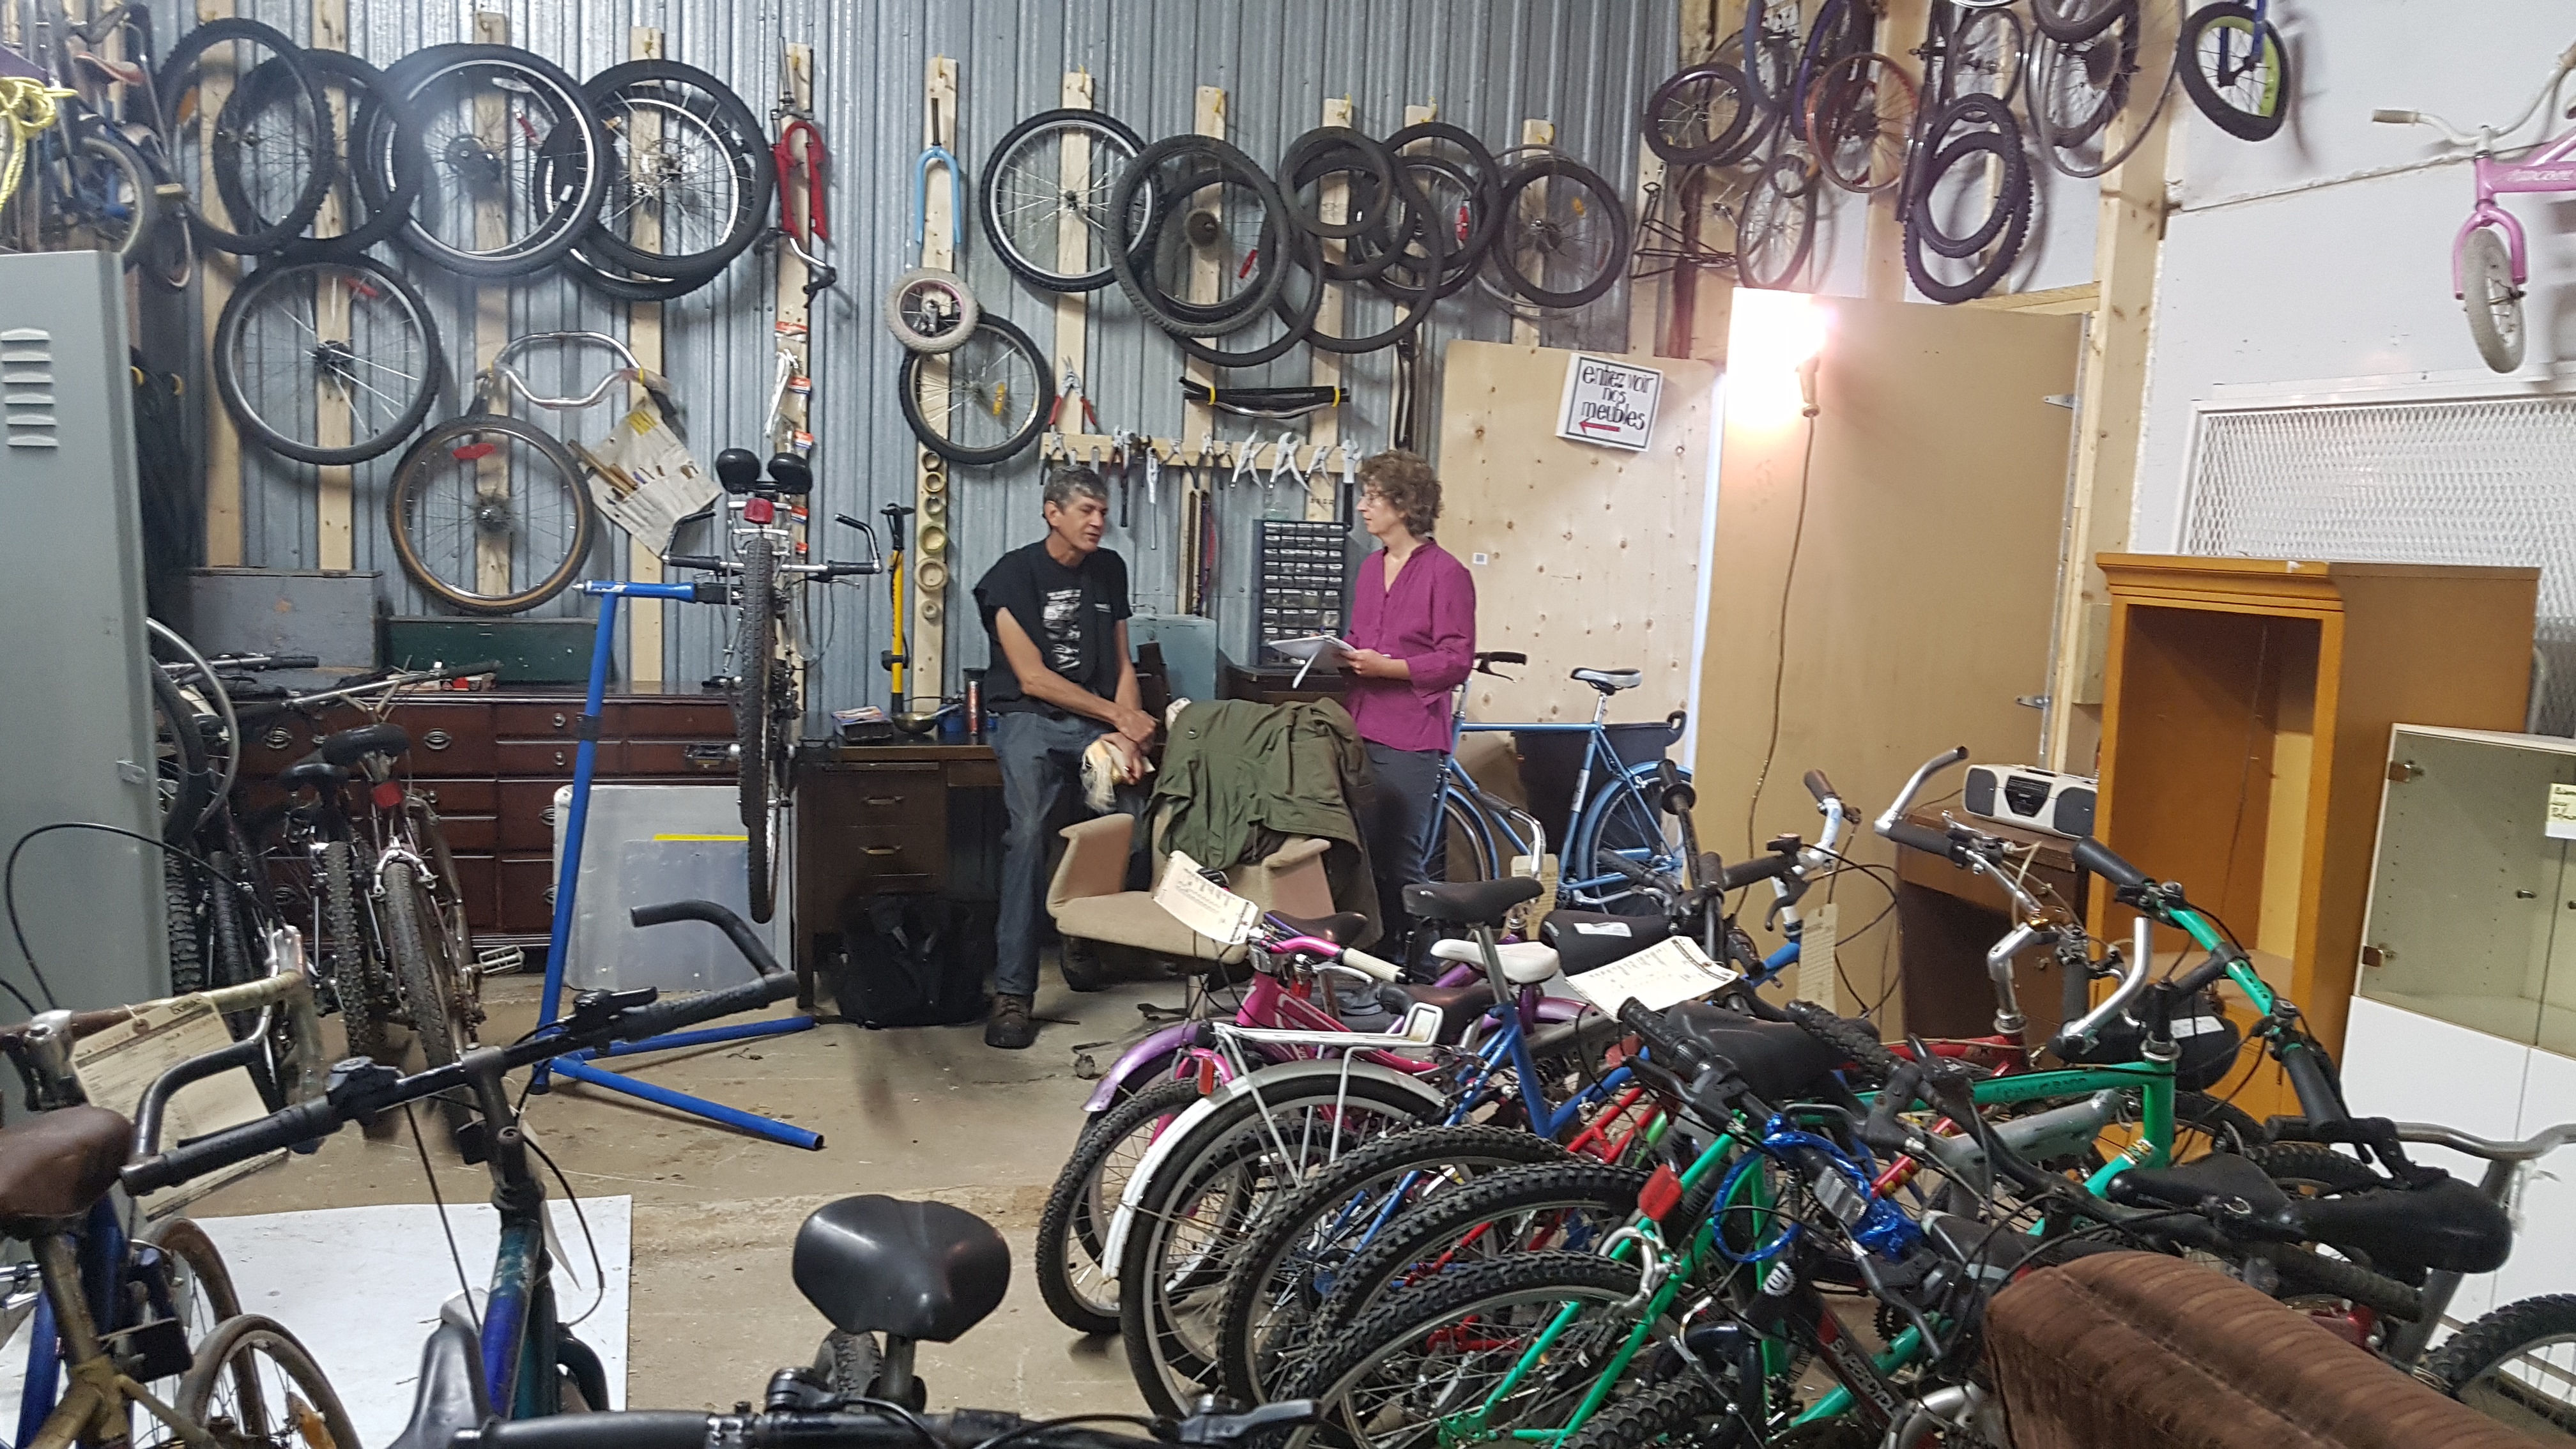 bike workshop iamges in hd